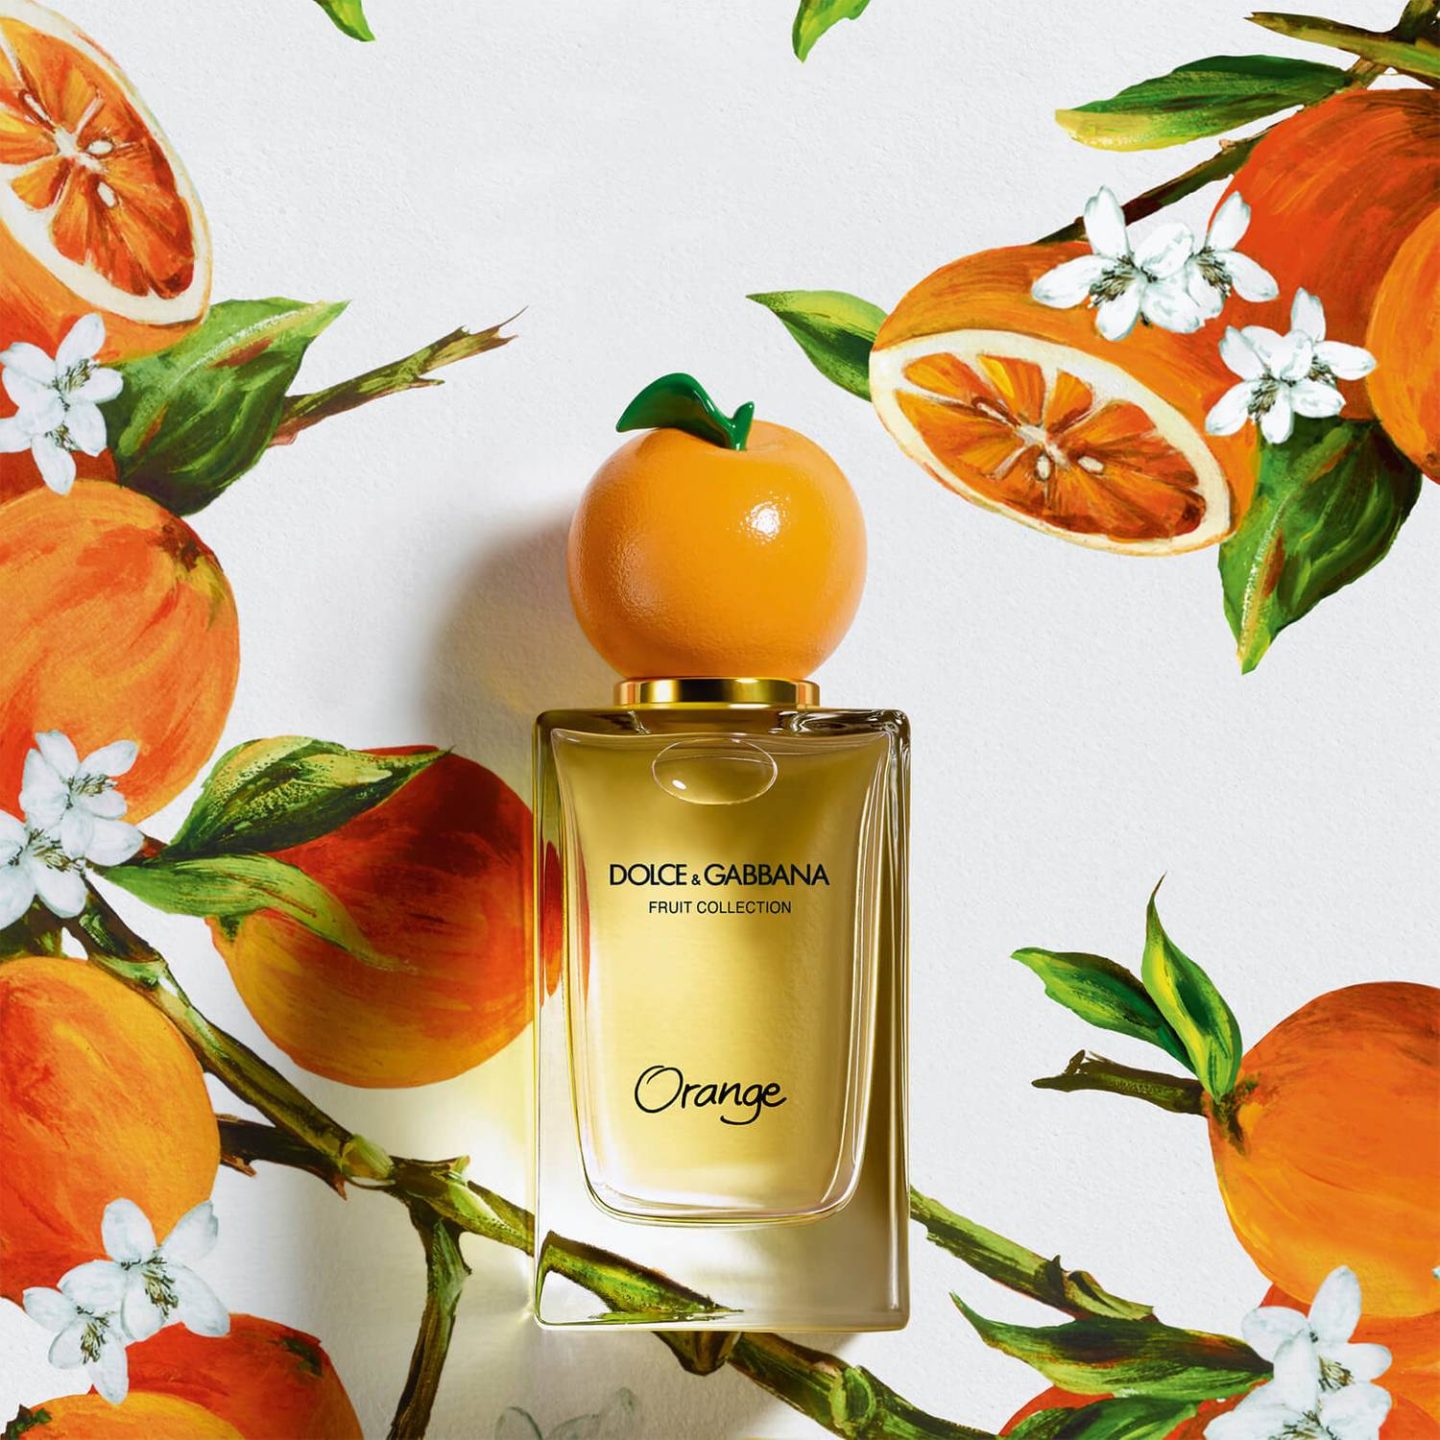 Dolce-Gabbana-Fruit-Collection-Orange perfume de naranja